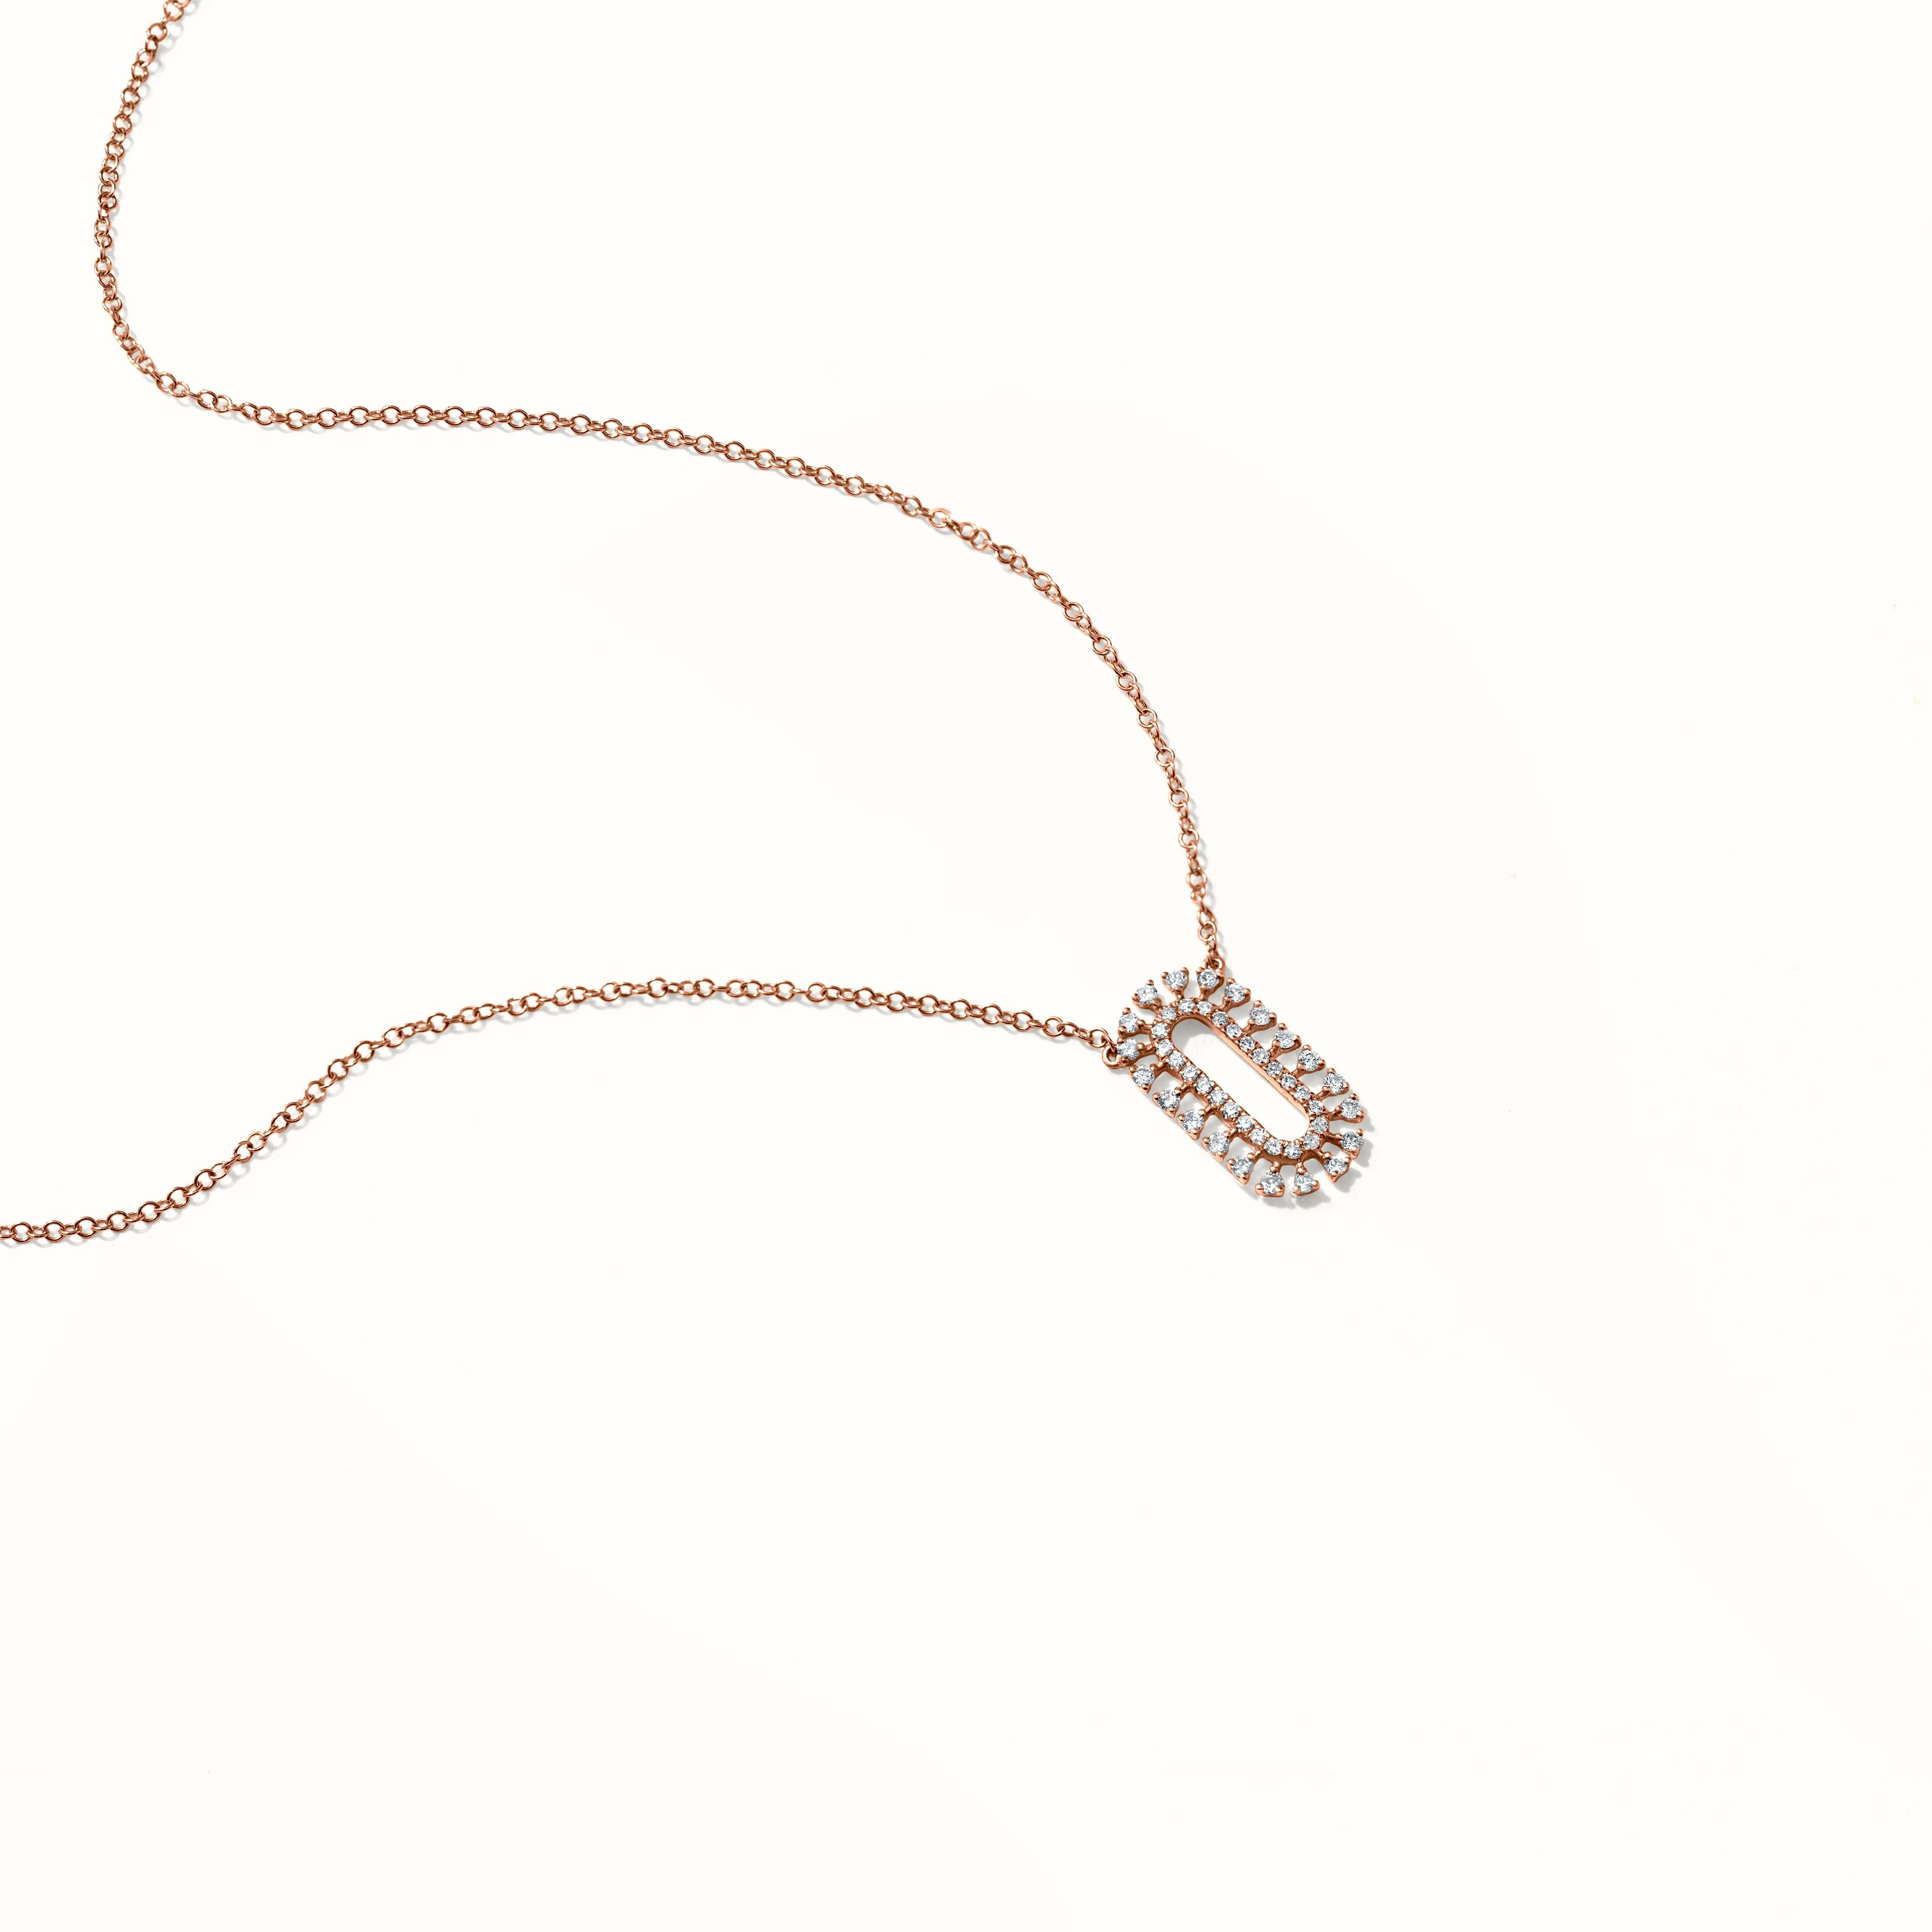 Women's Luxle 0.24 Carat Diamond Pendant Necklace in 18k Rose Gold